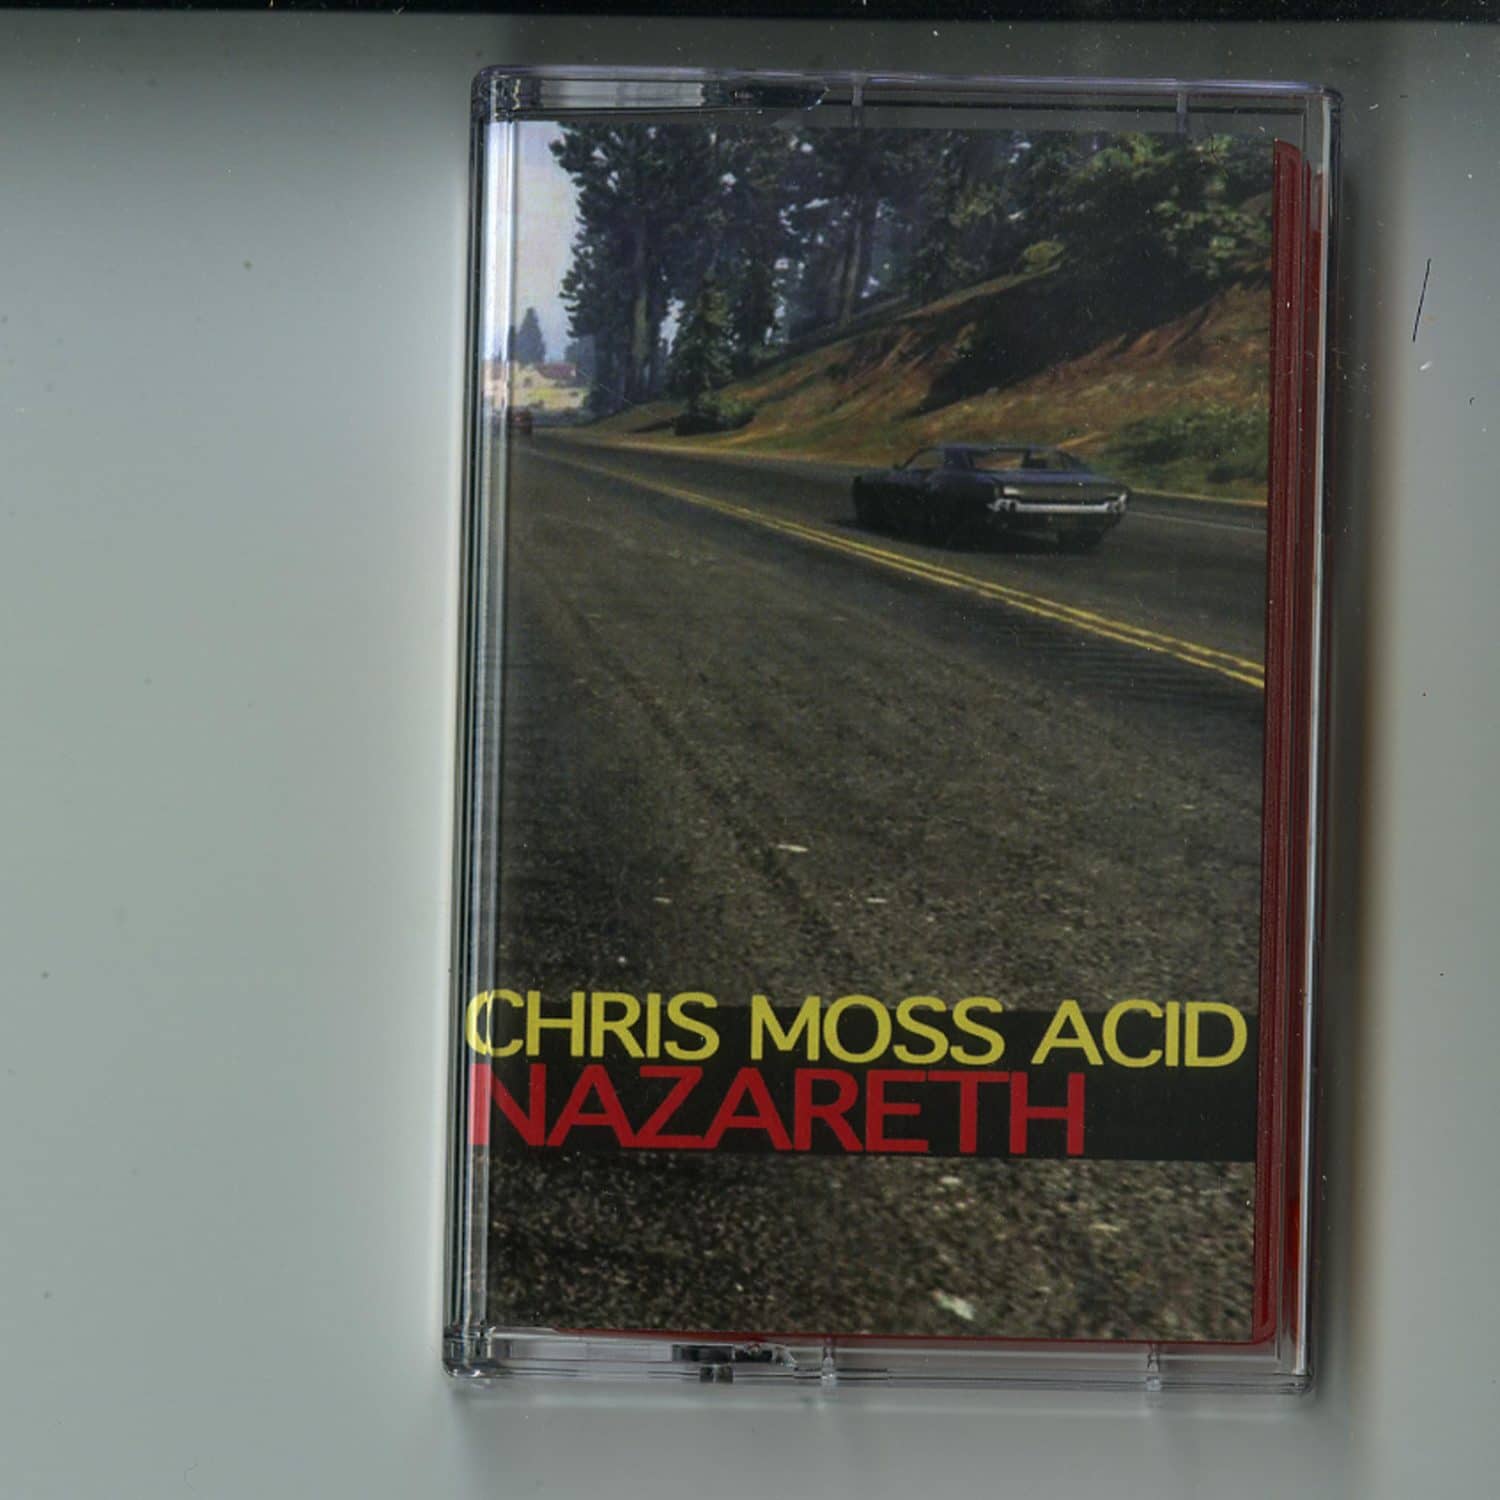 Chris Moss Acid - NYH58 